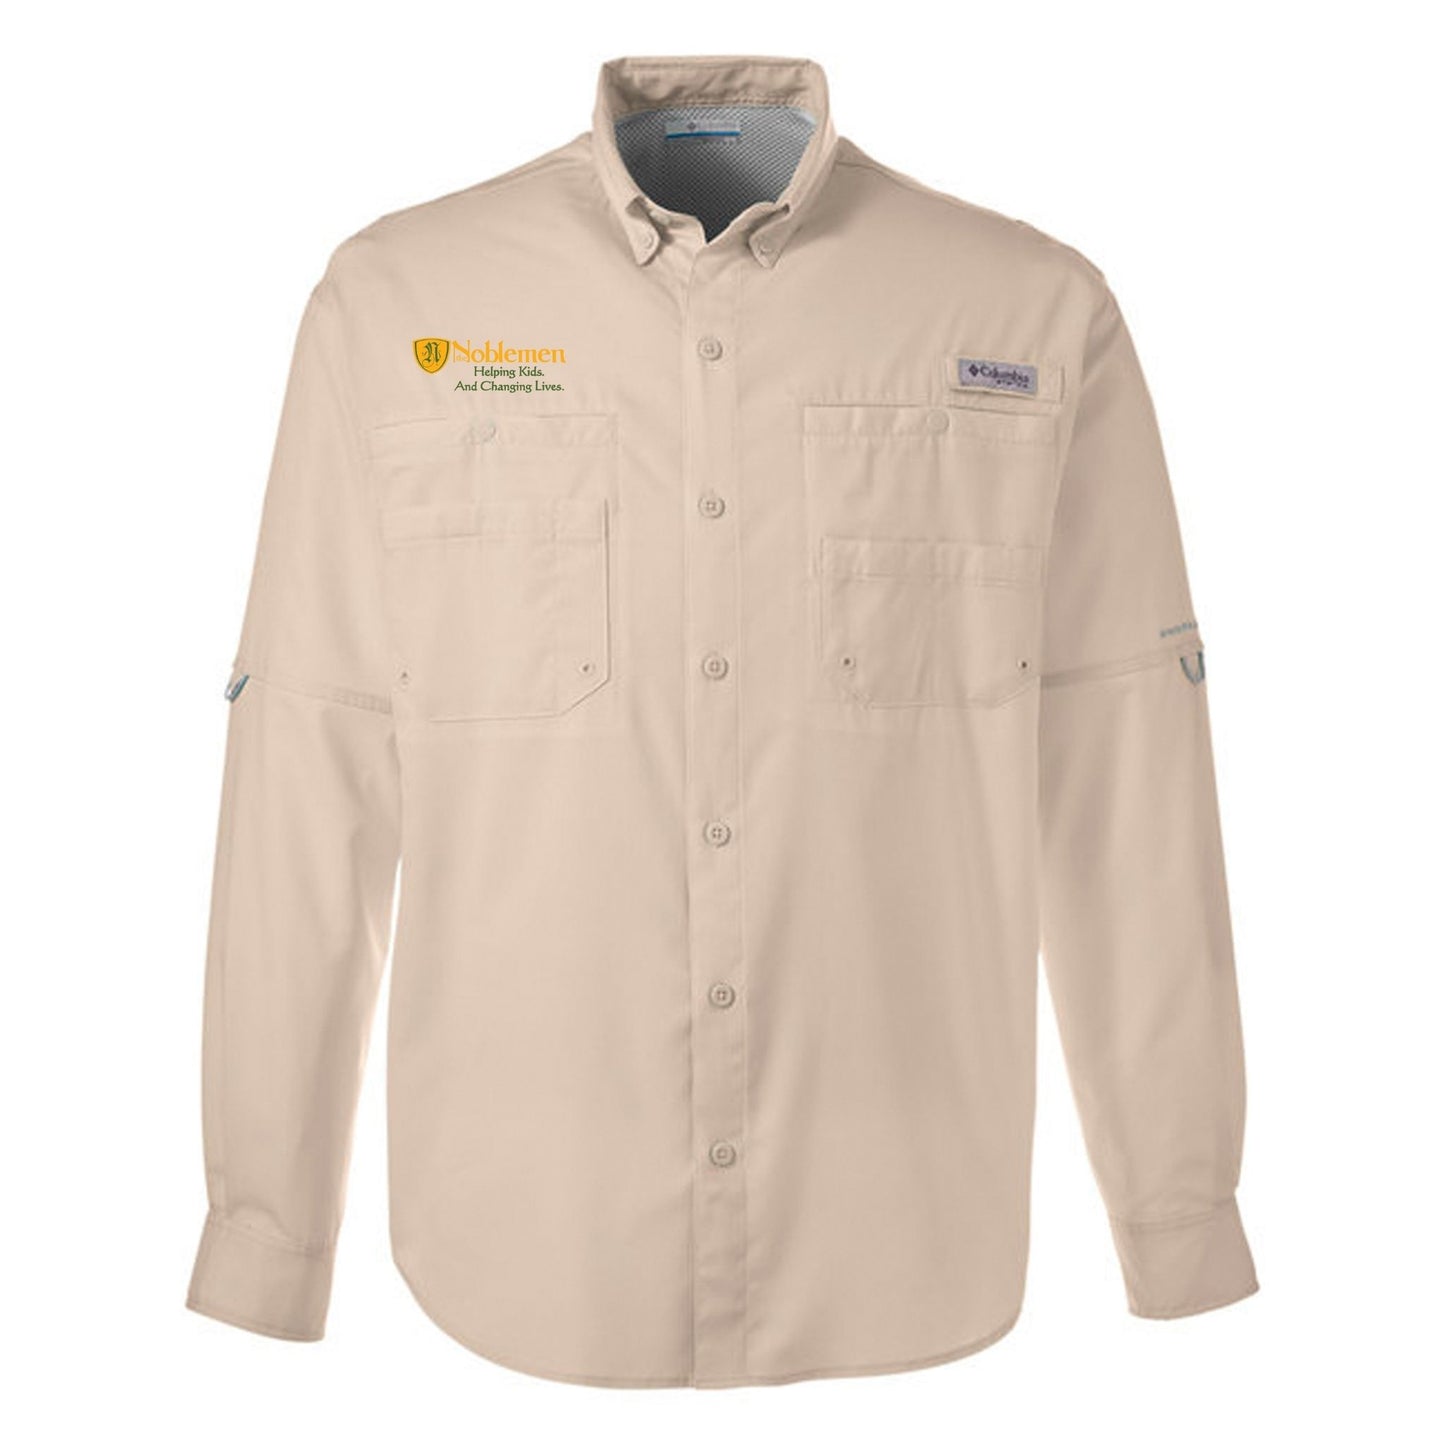 Noblemen - Columbia Tamiami Long-Sleeve Shirt